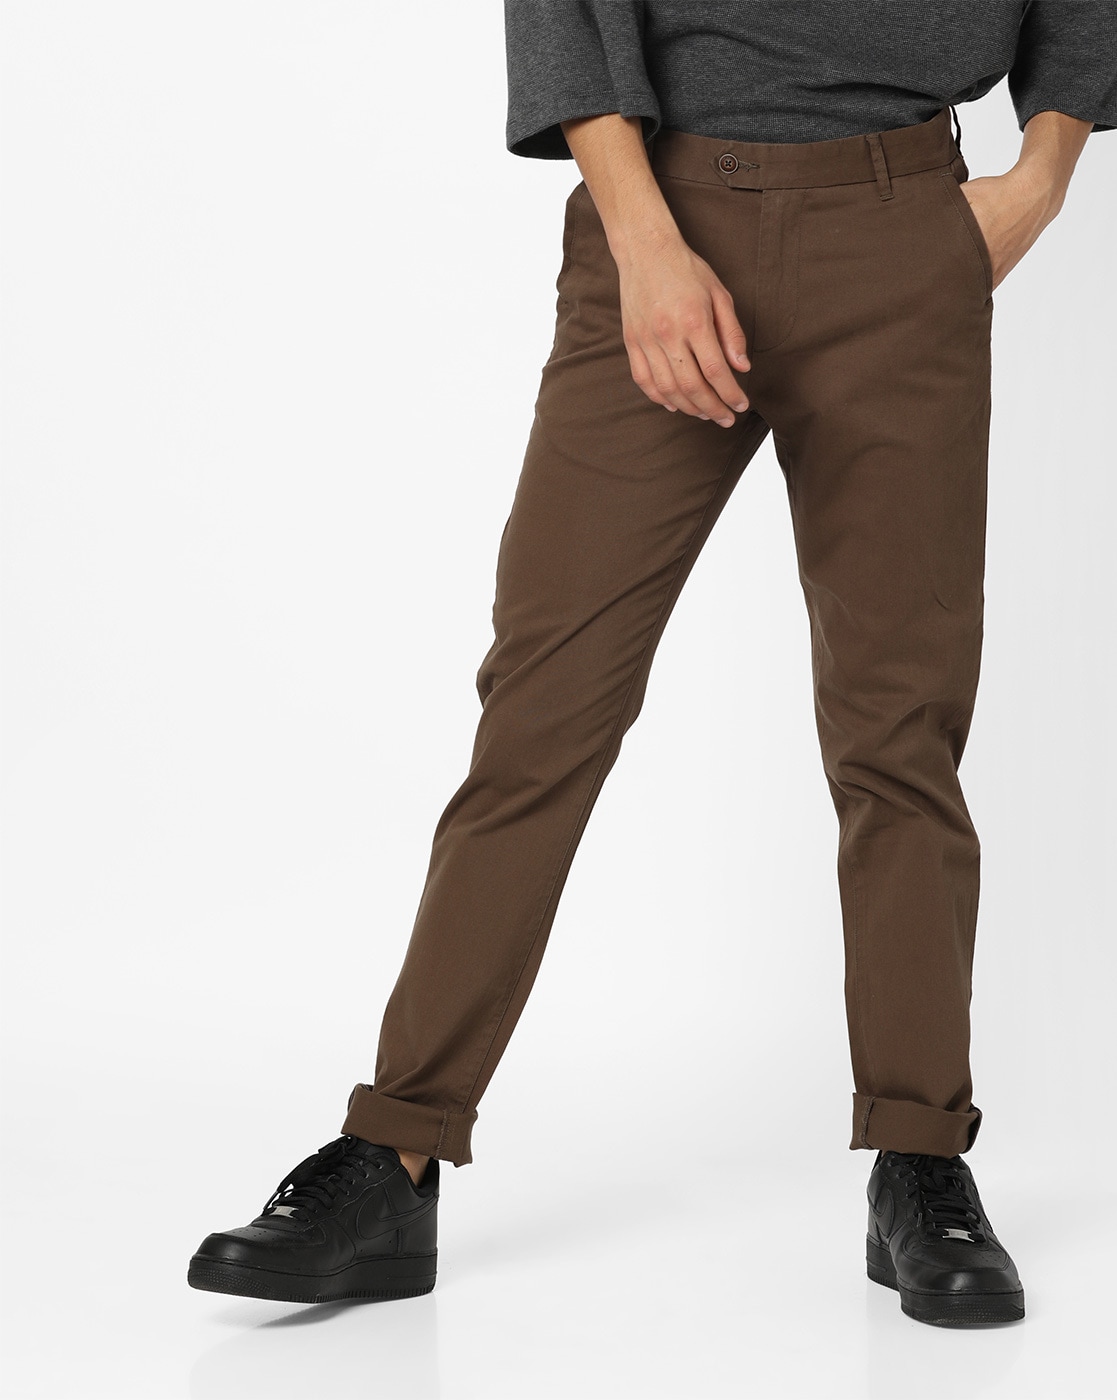 Buy Khaki Trousers & Pants for Men by SPYKAR Online | Ajio.com